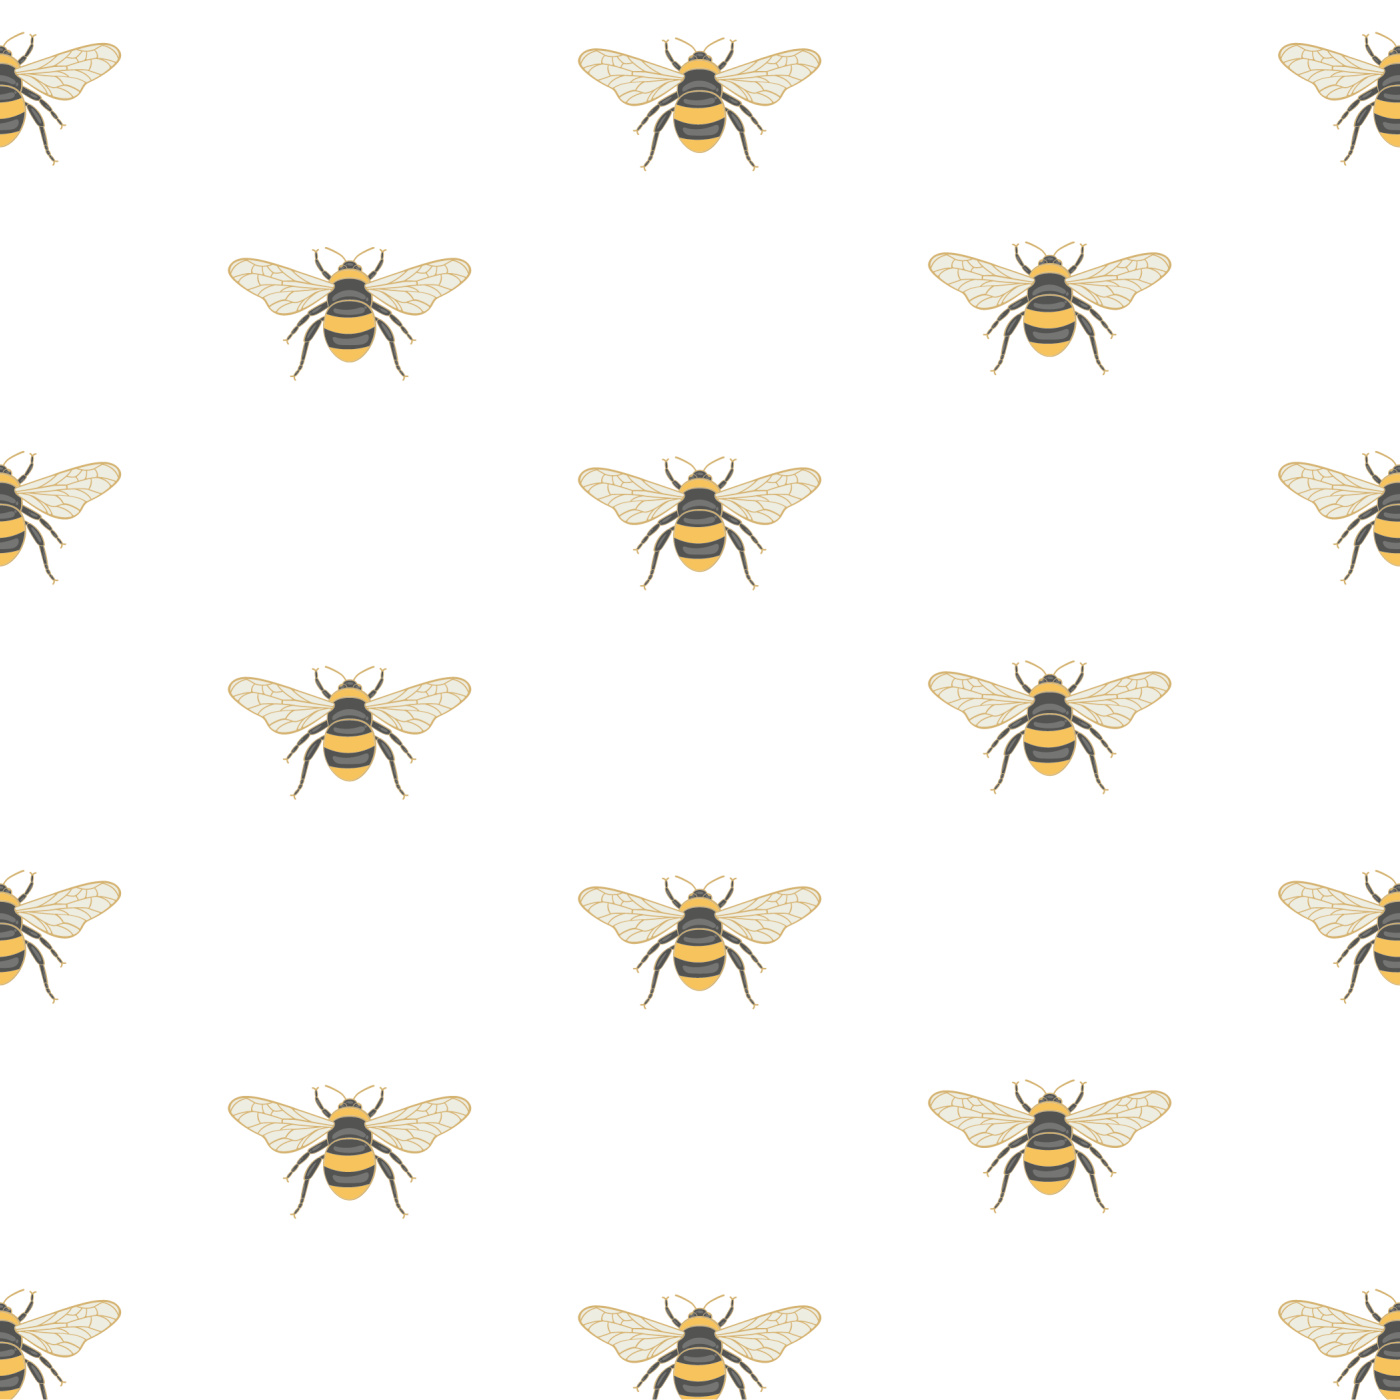 https://static.basicinvite.com/media/bi/33689/bee-hive-wallpaper-2x.jpg?q=1694030443